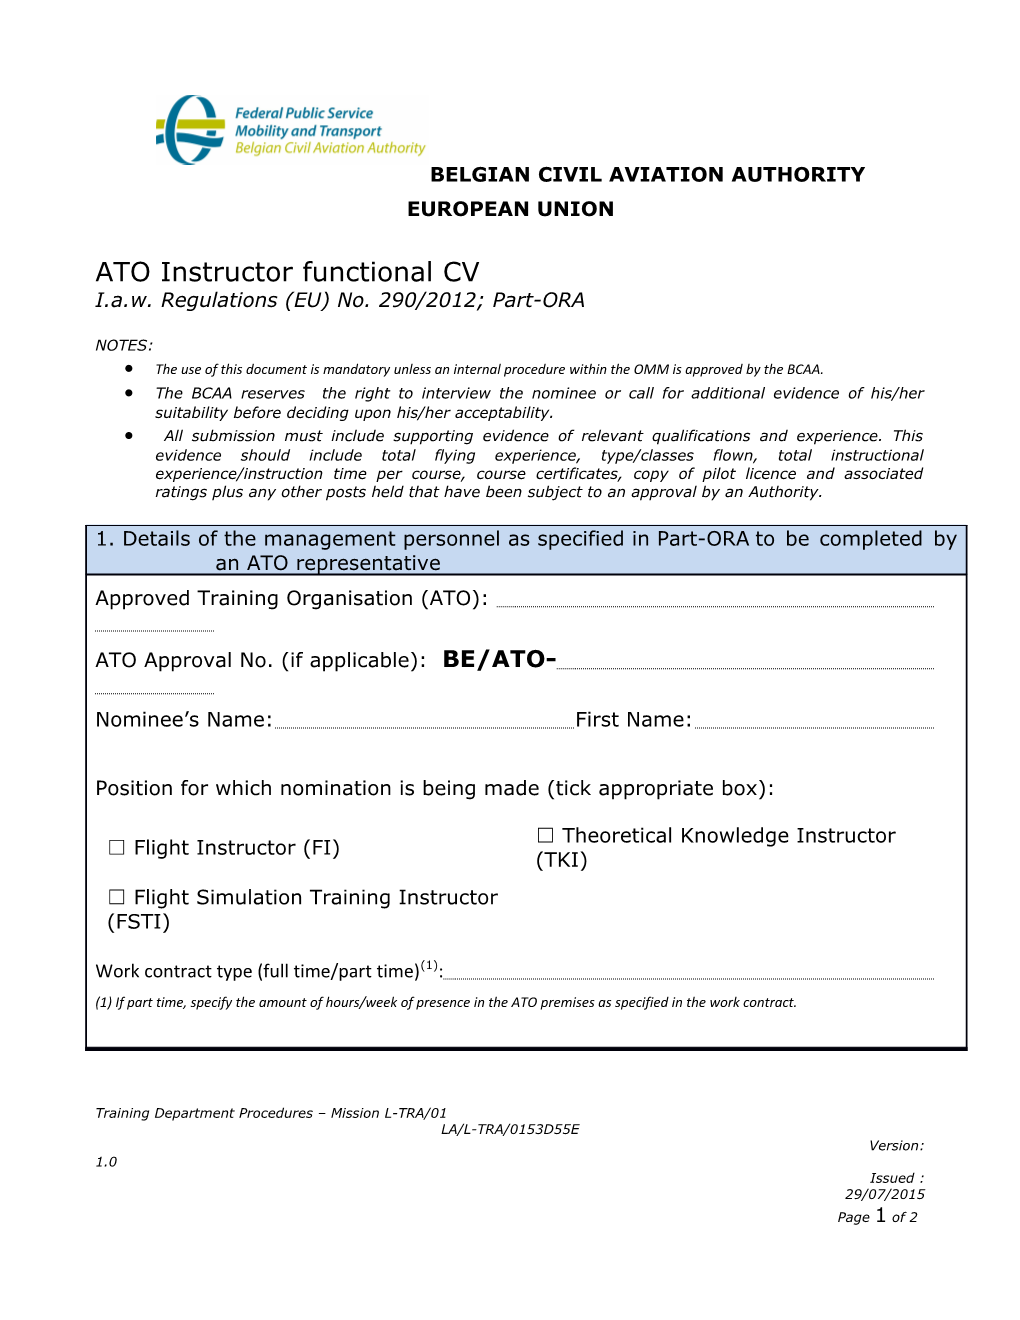 ATO Instructorfunctional CV